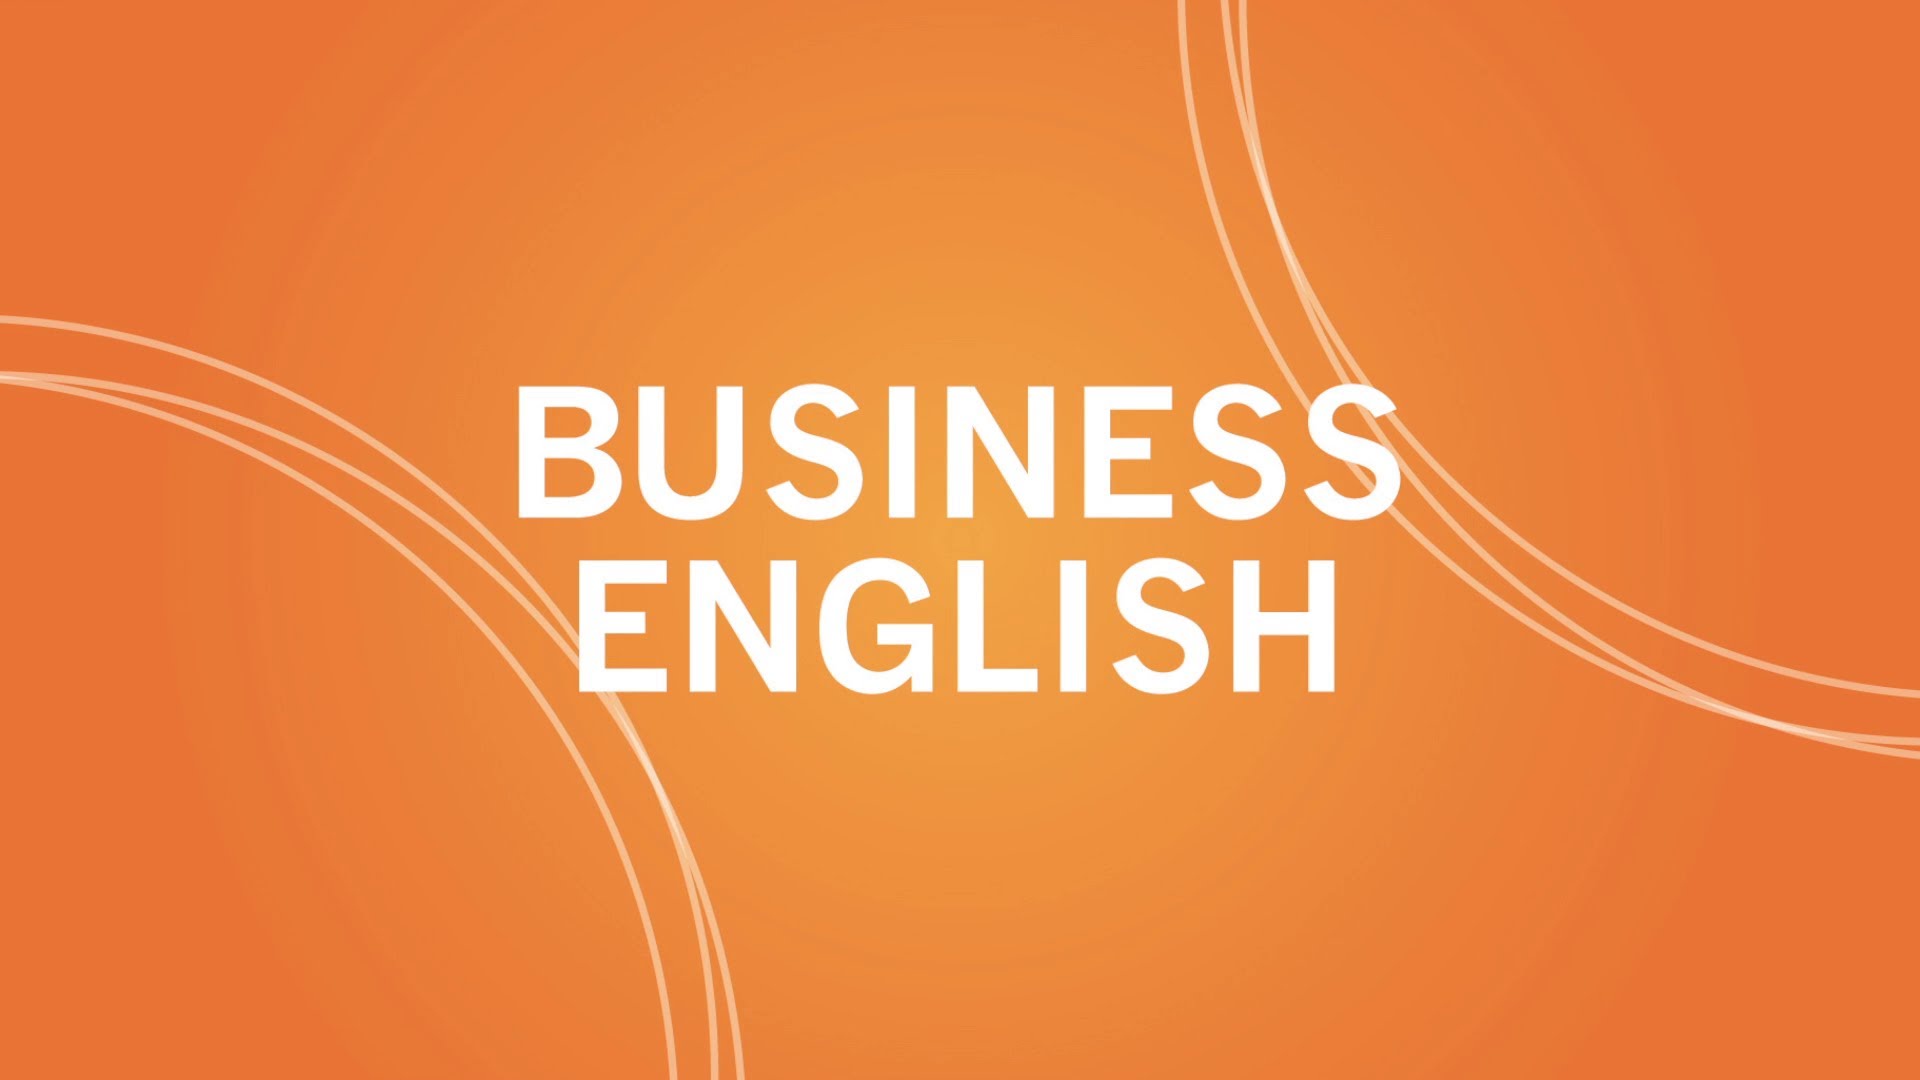 Про бизнес на английском. Бизнес английский. Деловой английский. Business English картинки. Бизнес на английском языке.